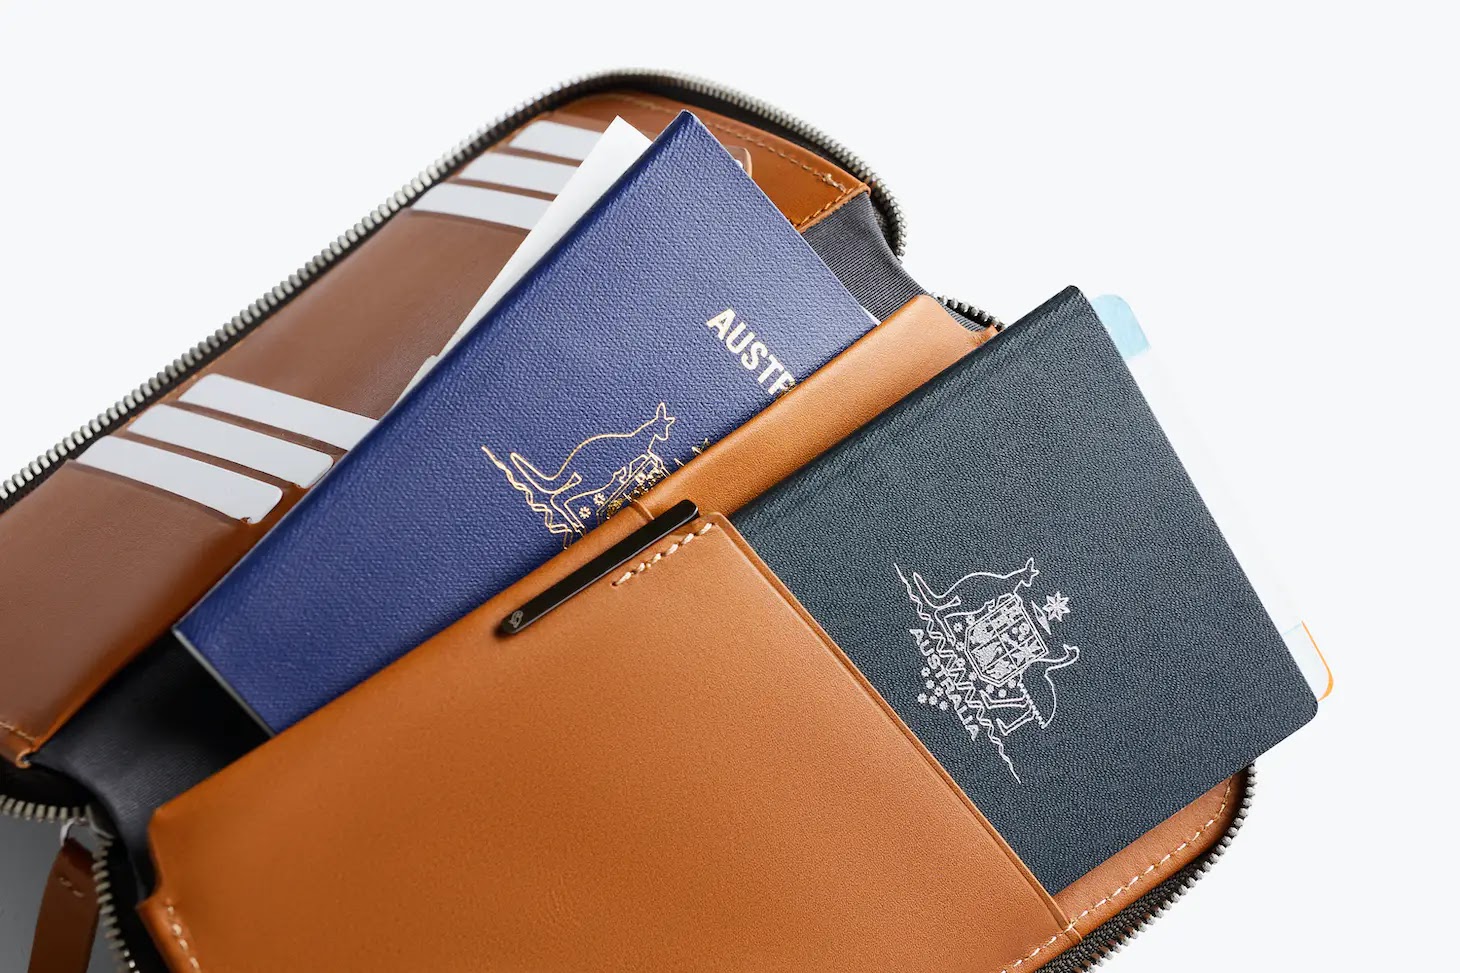 Bellroy Travel Folio Leather Passport Case